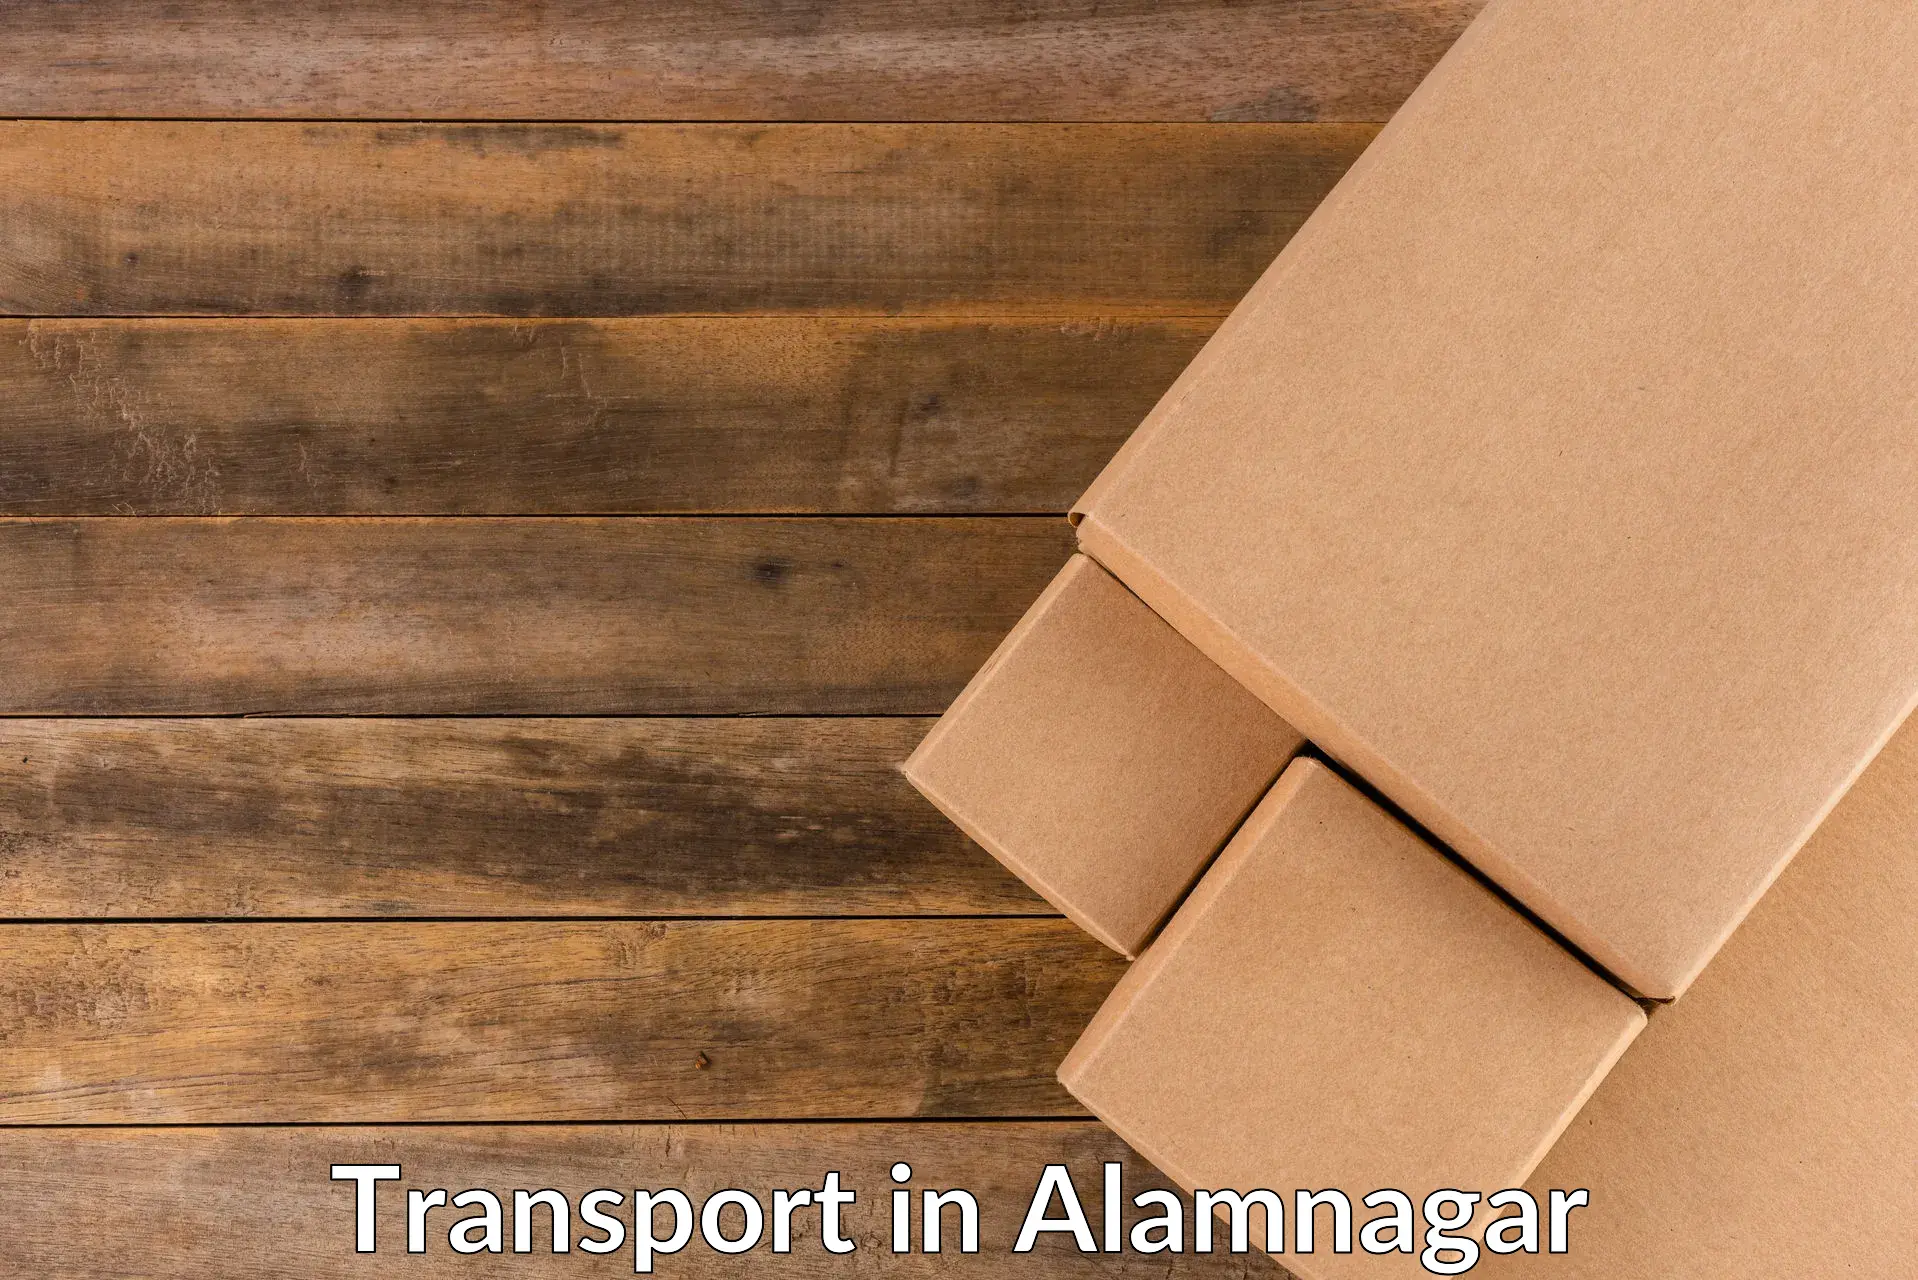 Air freight transport services in Alamnagar